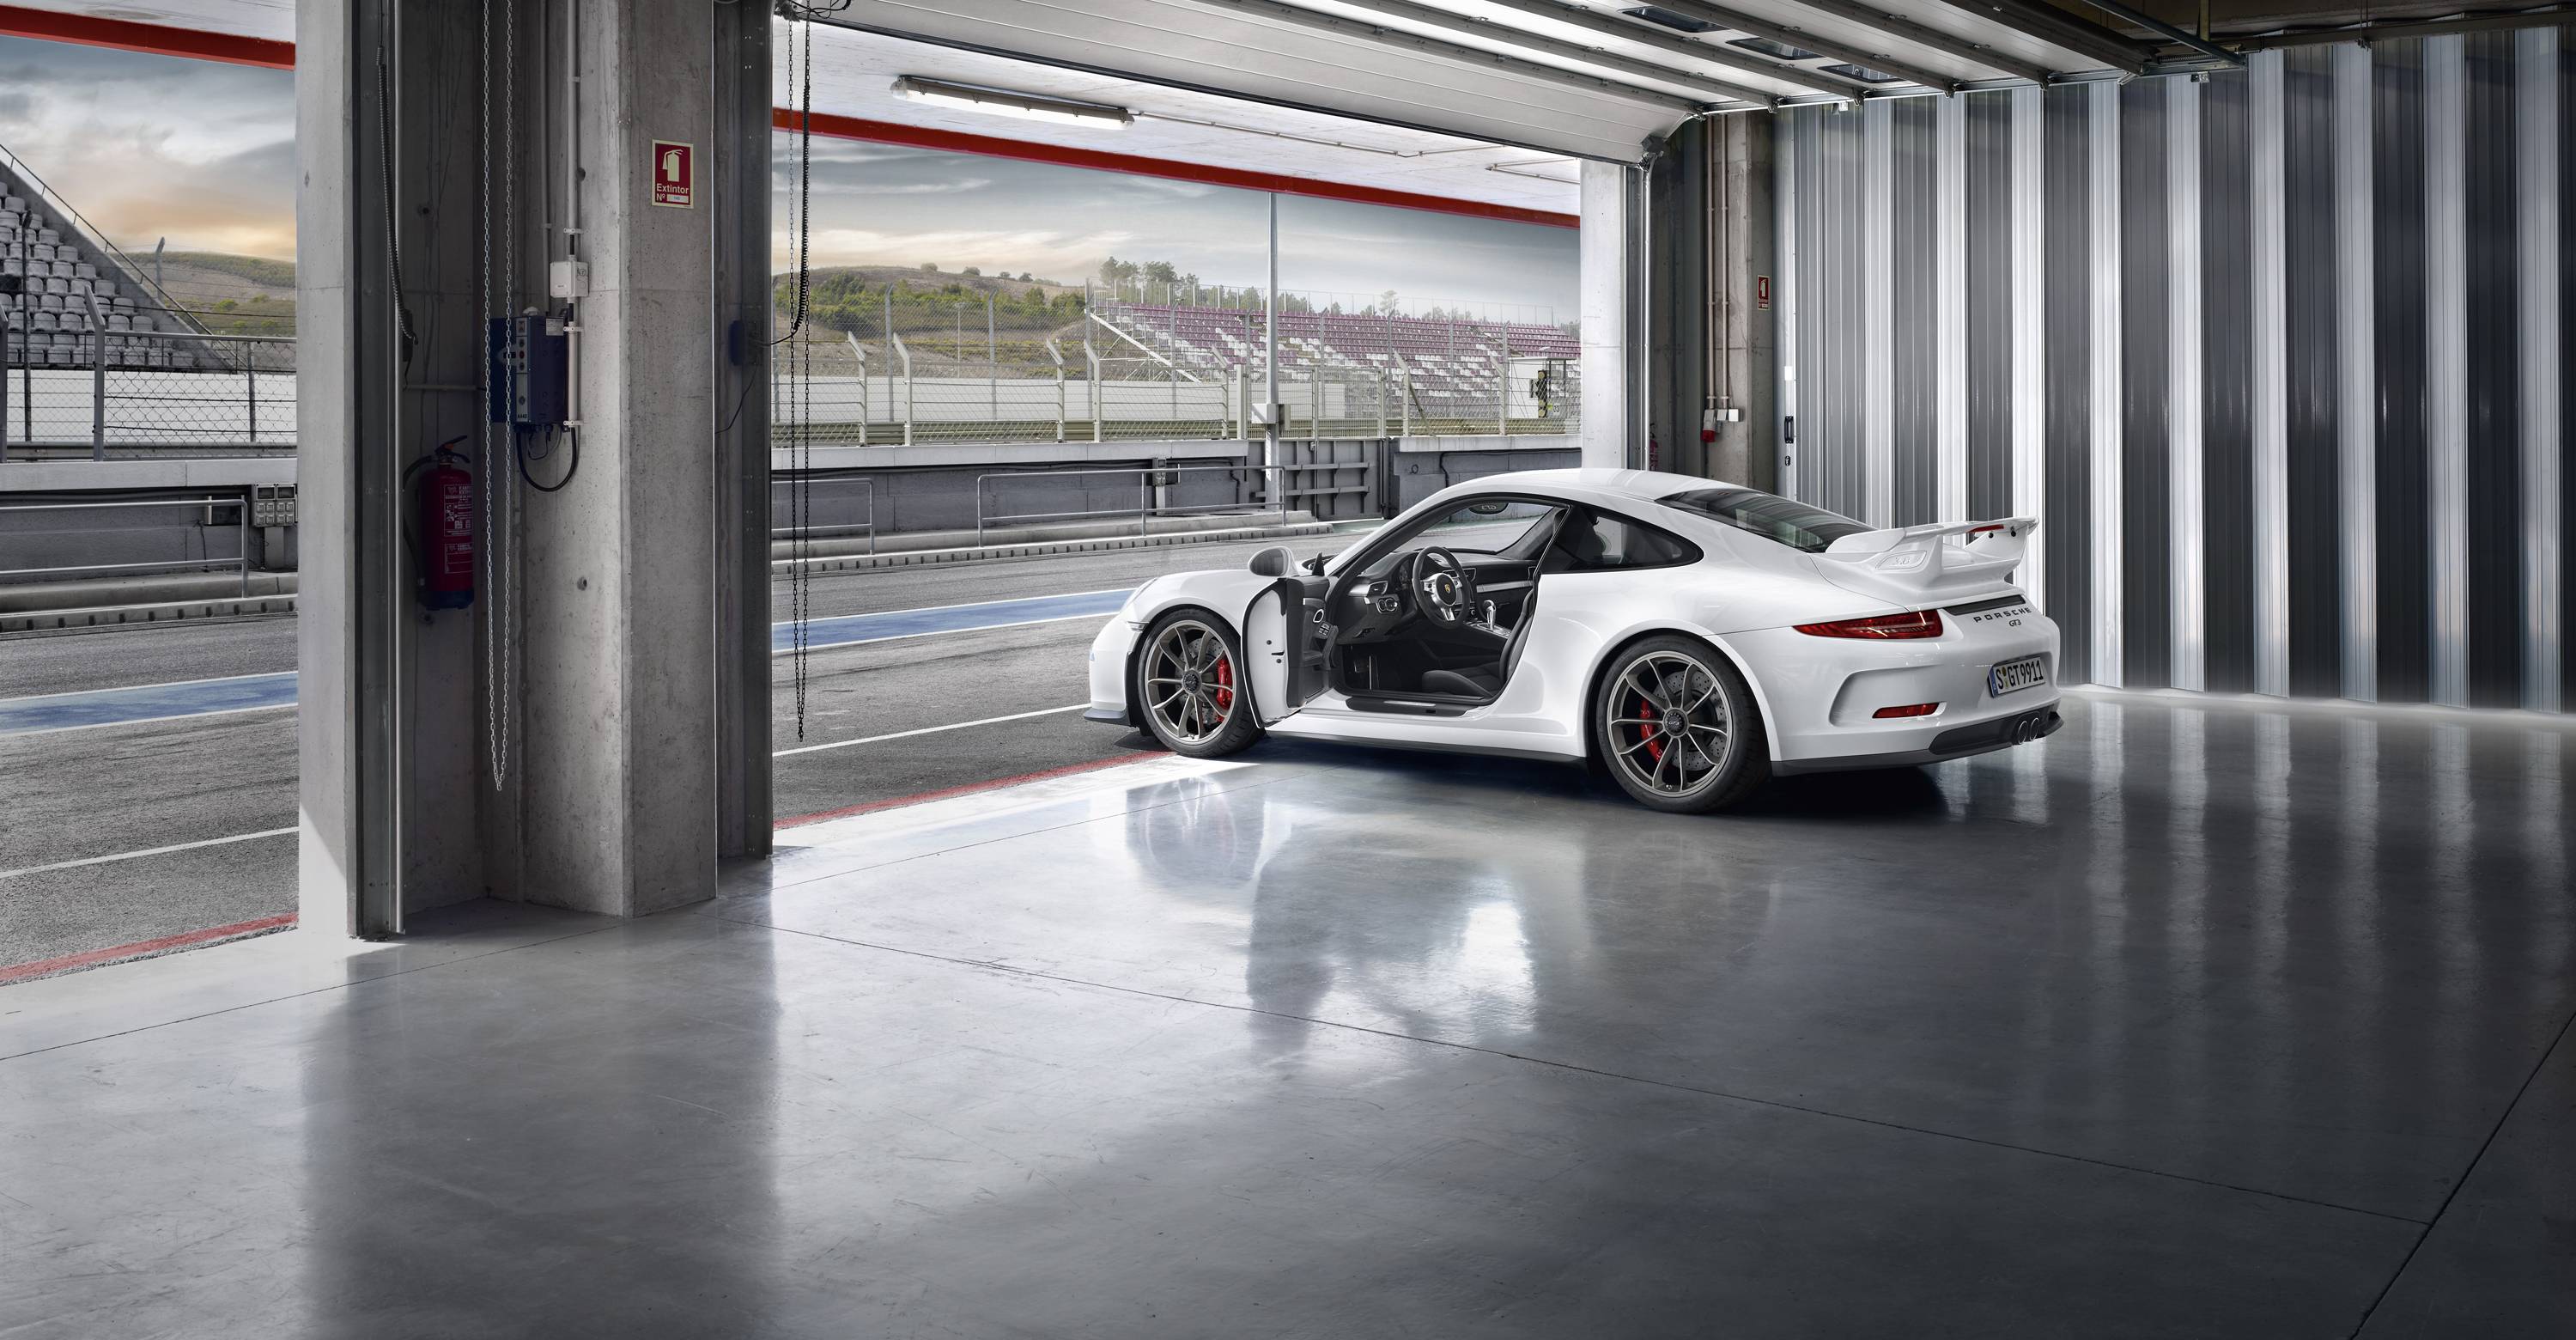 Porsche 911 GT3 Overview. THE JET LIFE